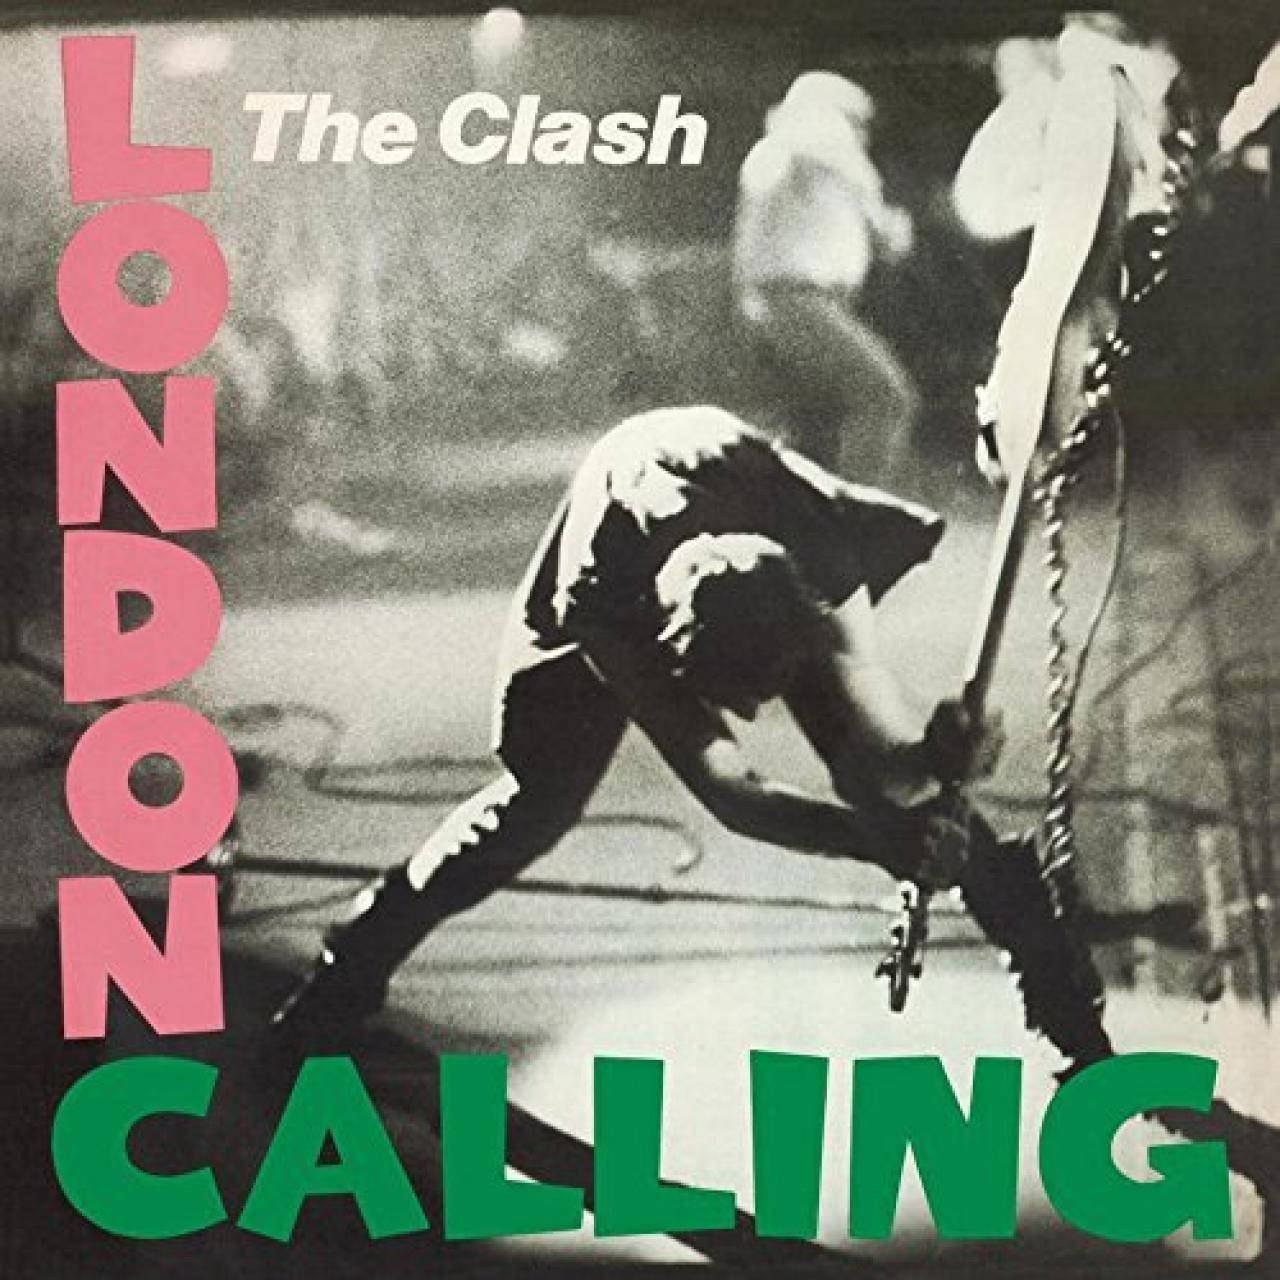 The Clash London Calling Album Cover Wallpaper